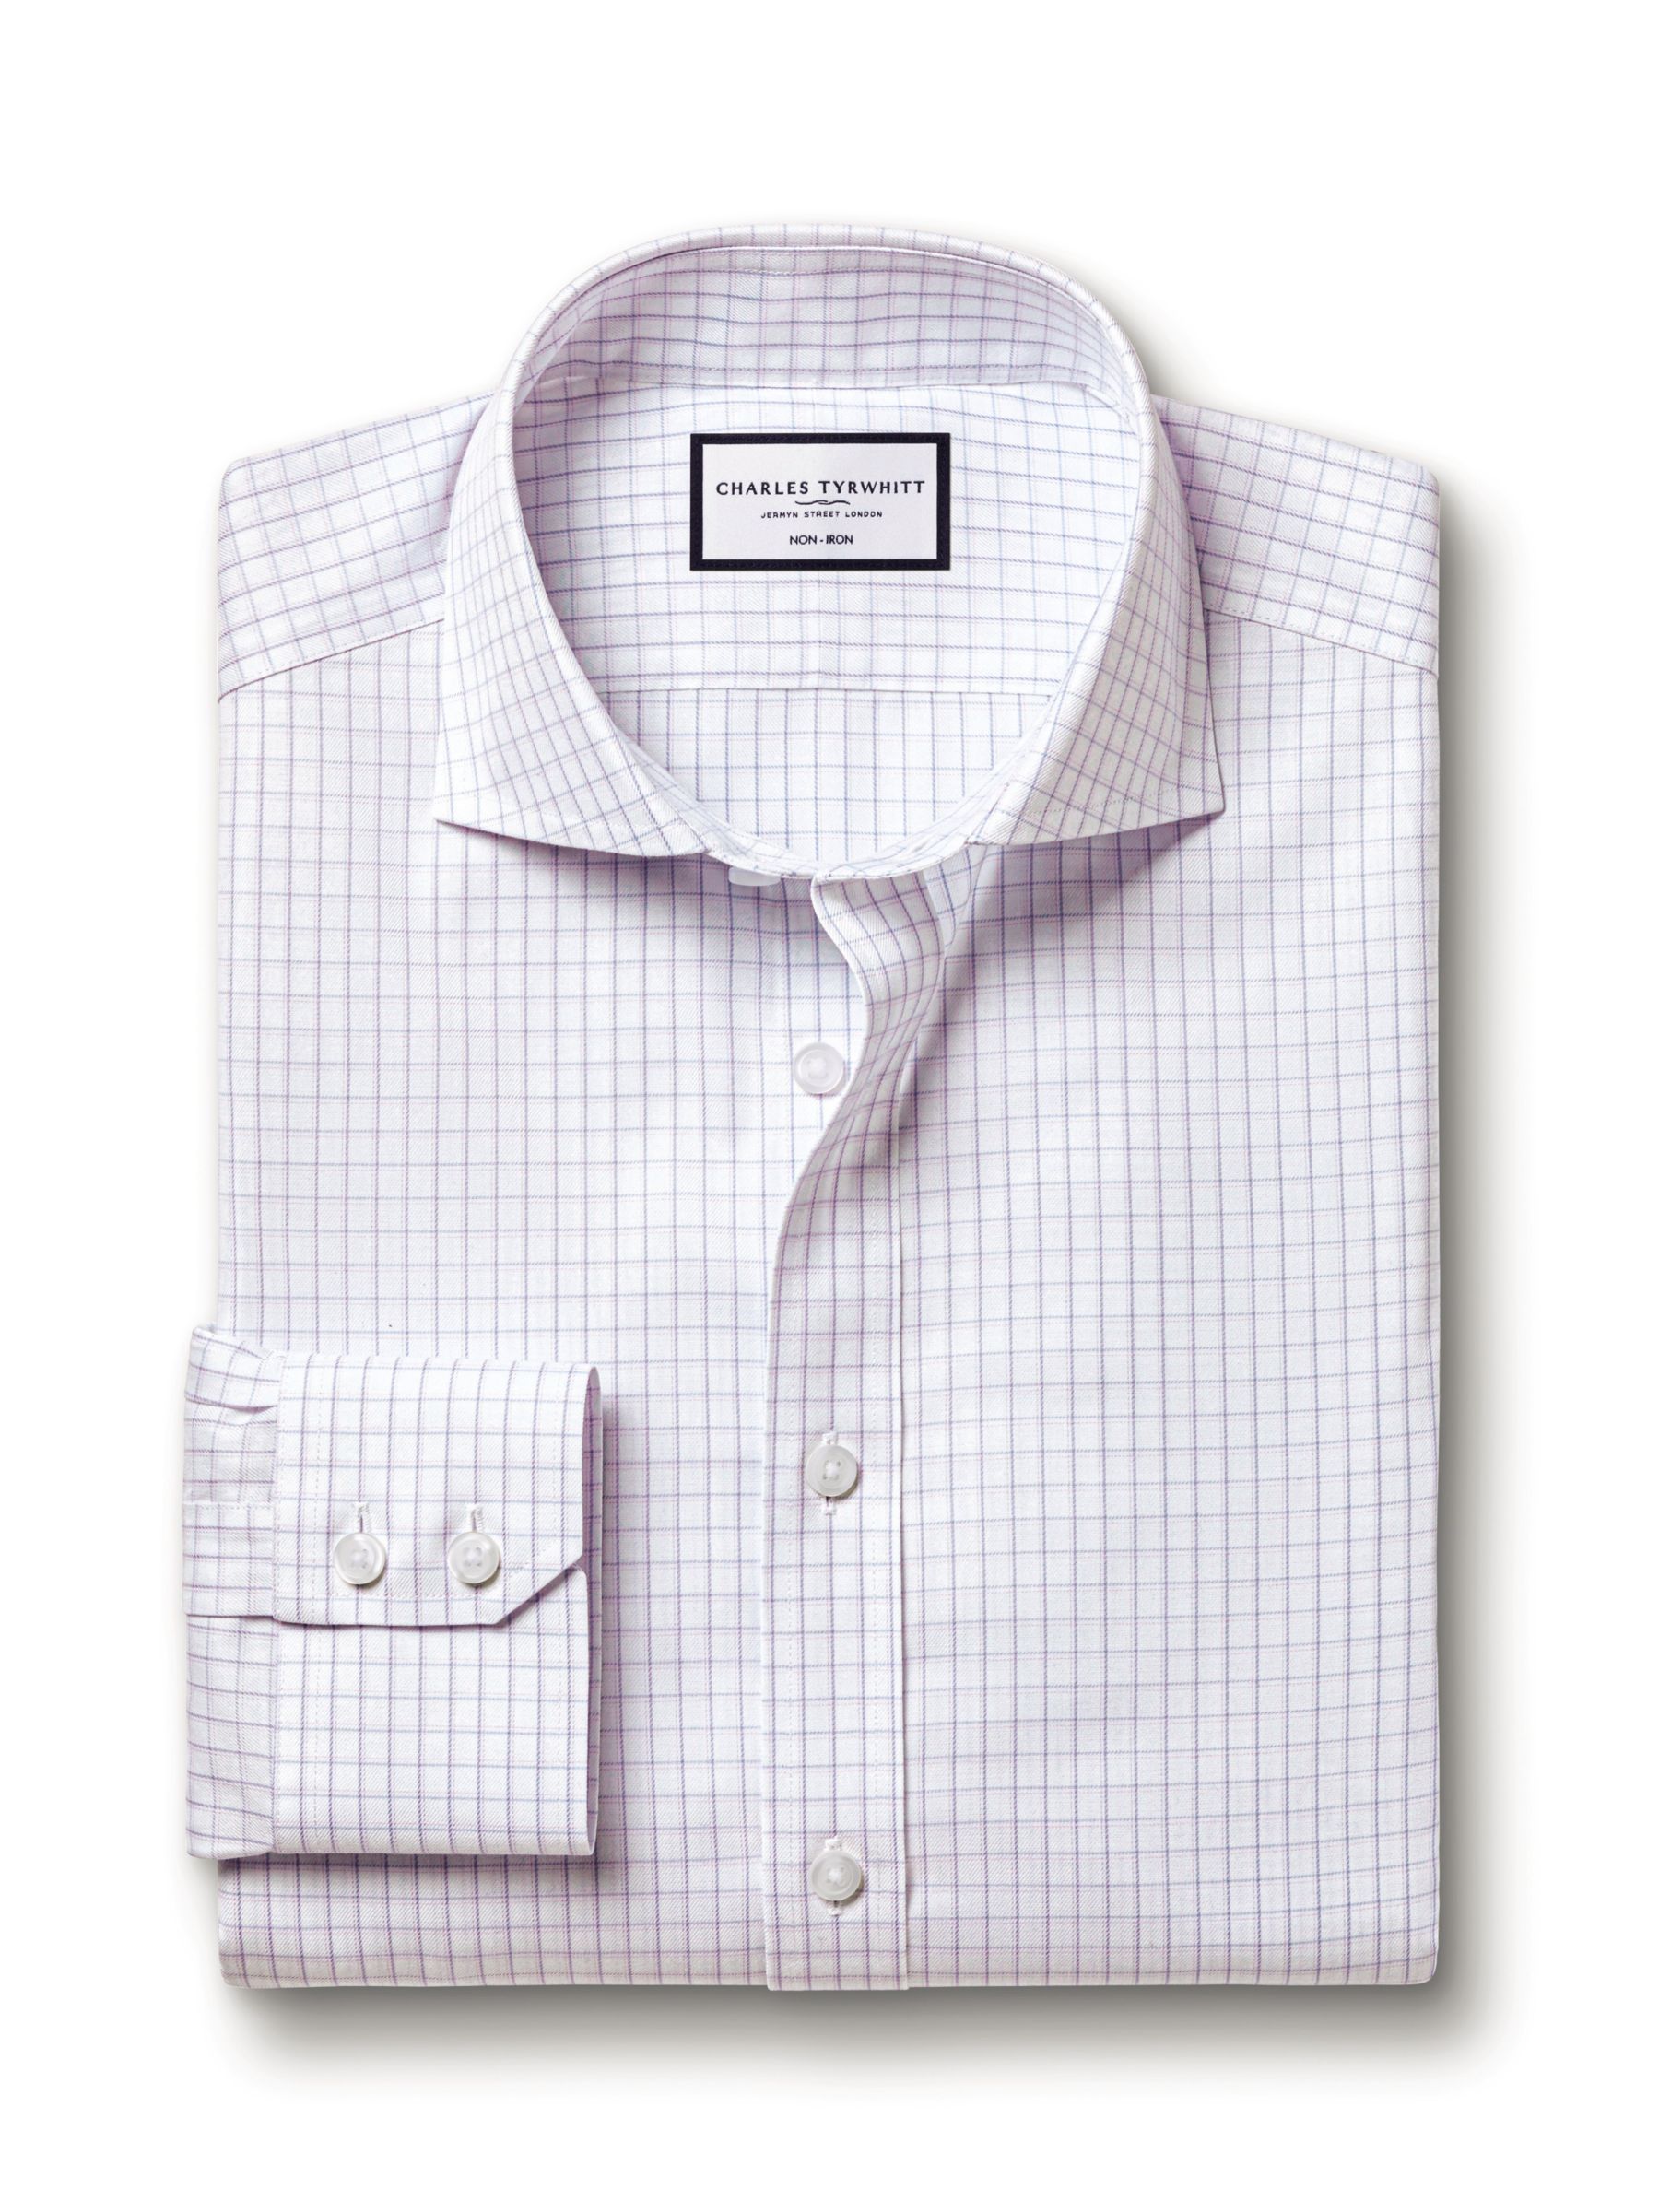 Buy Charles Tyrwhitt Key Check Non-Iron Twill Shirt Online at johnlewis.com